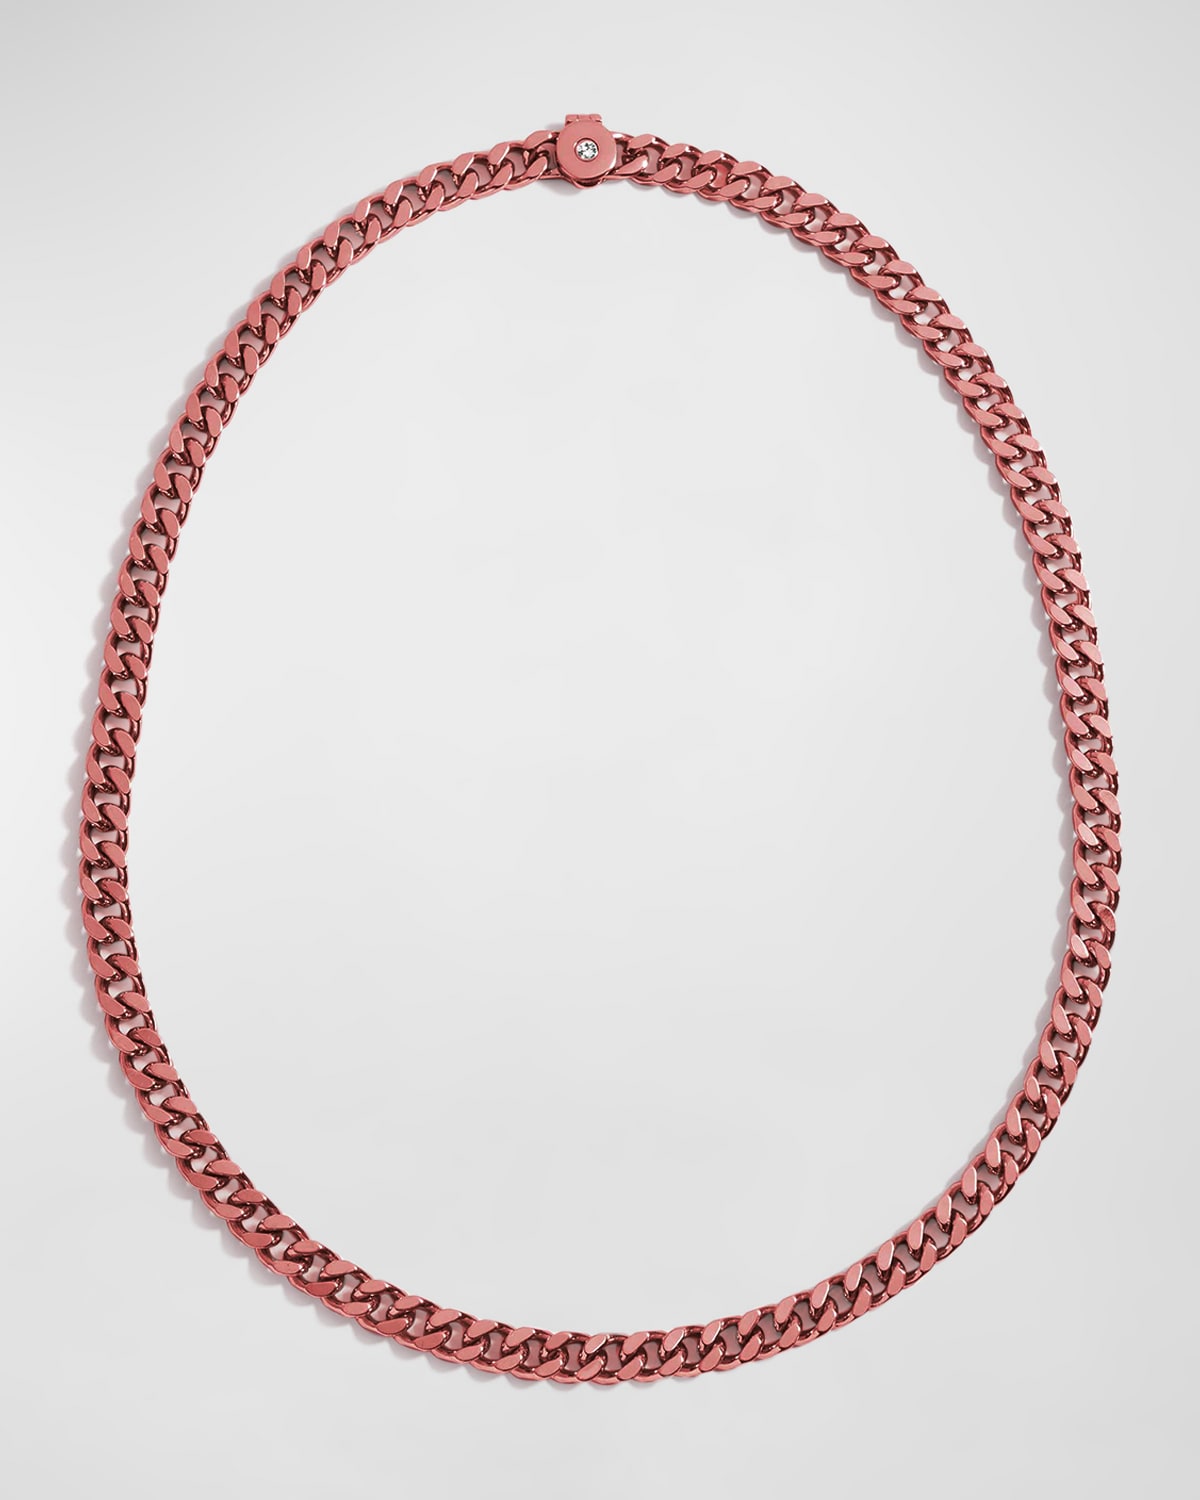 DEMARSON Luca Chain Necklace, Neon Rose